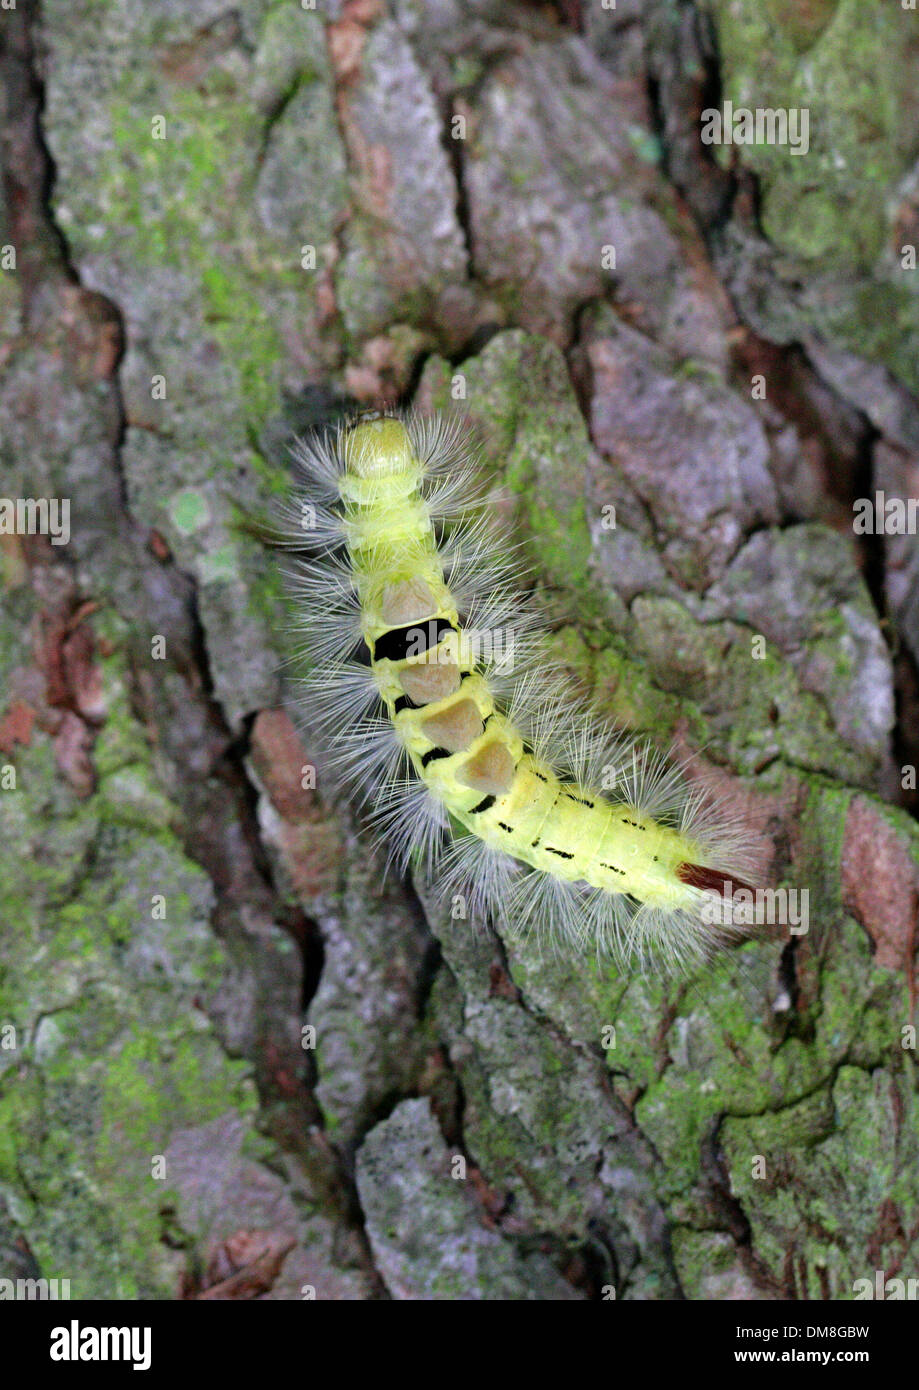 Caterpillar of the Pale Tussock Moth or Red-tail Moth, Calliteara pudibunda (Dasychira pudibunda), Lymantriidae. Stock Photo